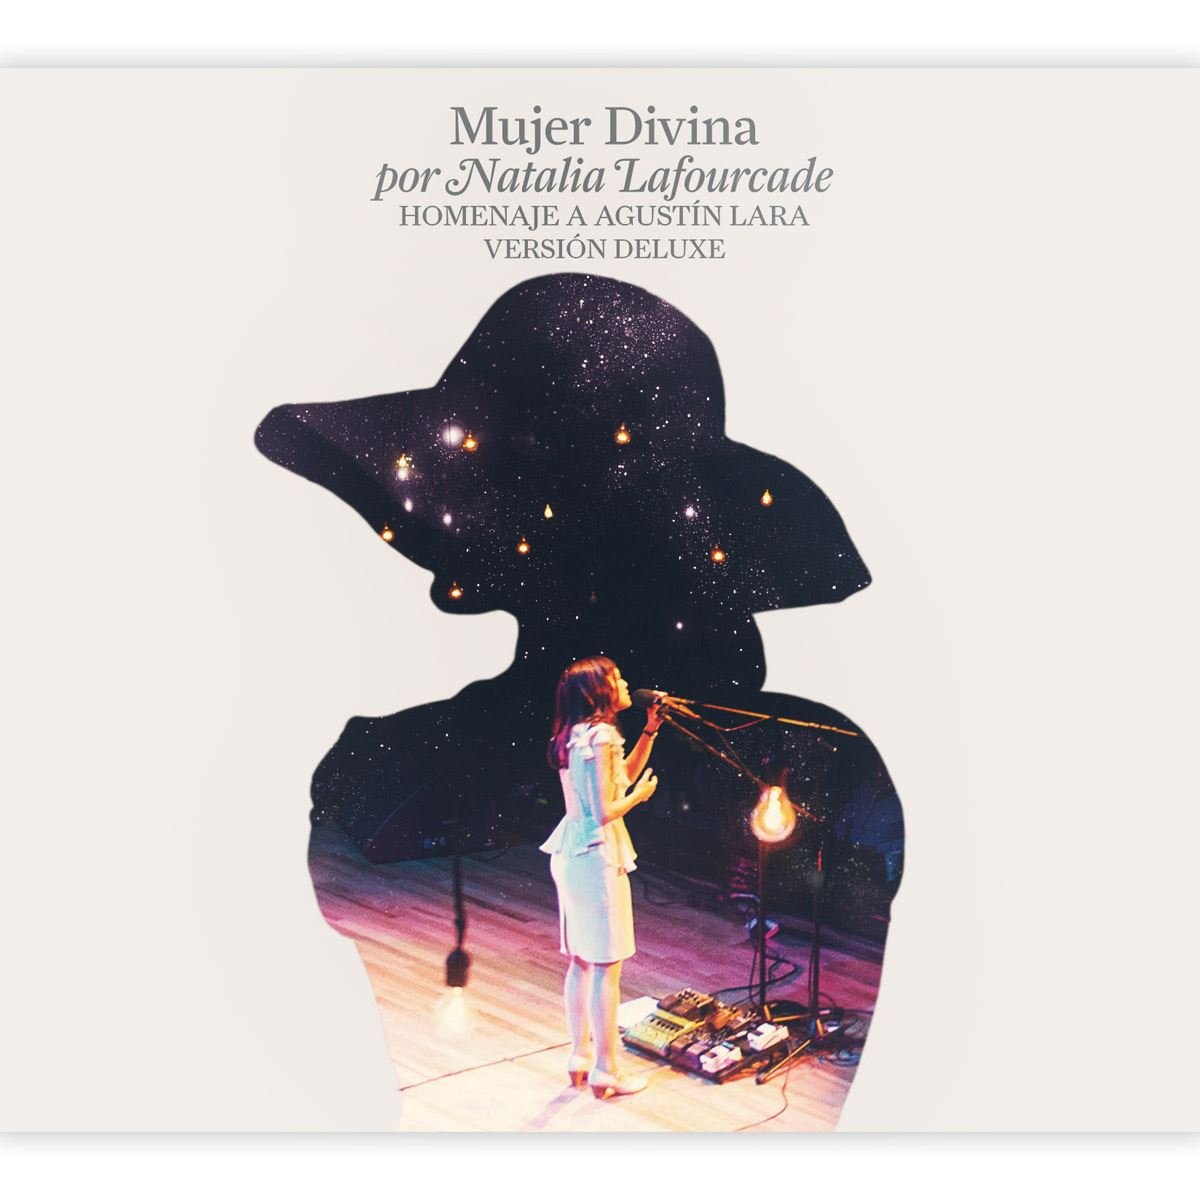 Mujer Divina (Homenaje a Agustin Lara) CD+DVD